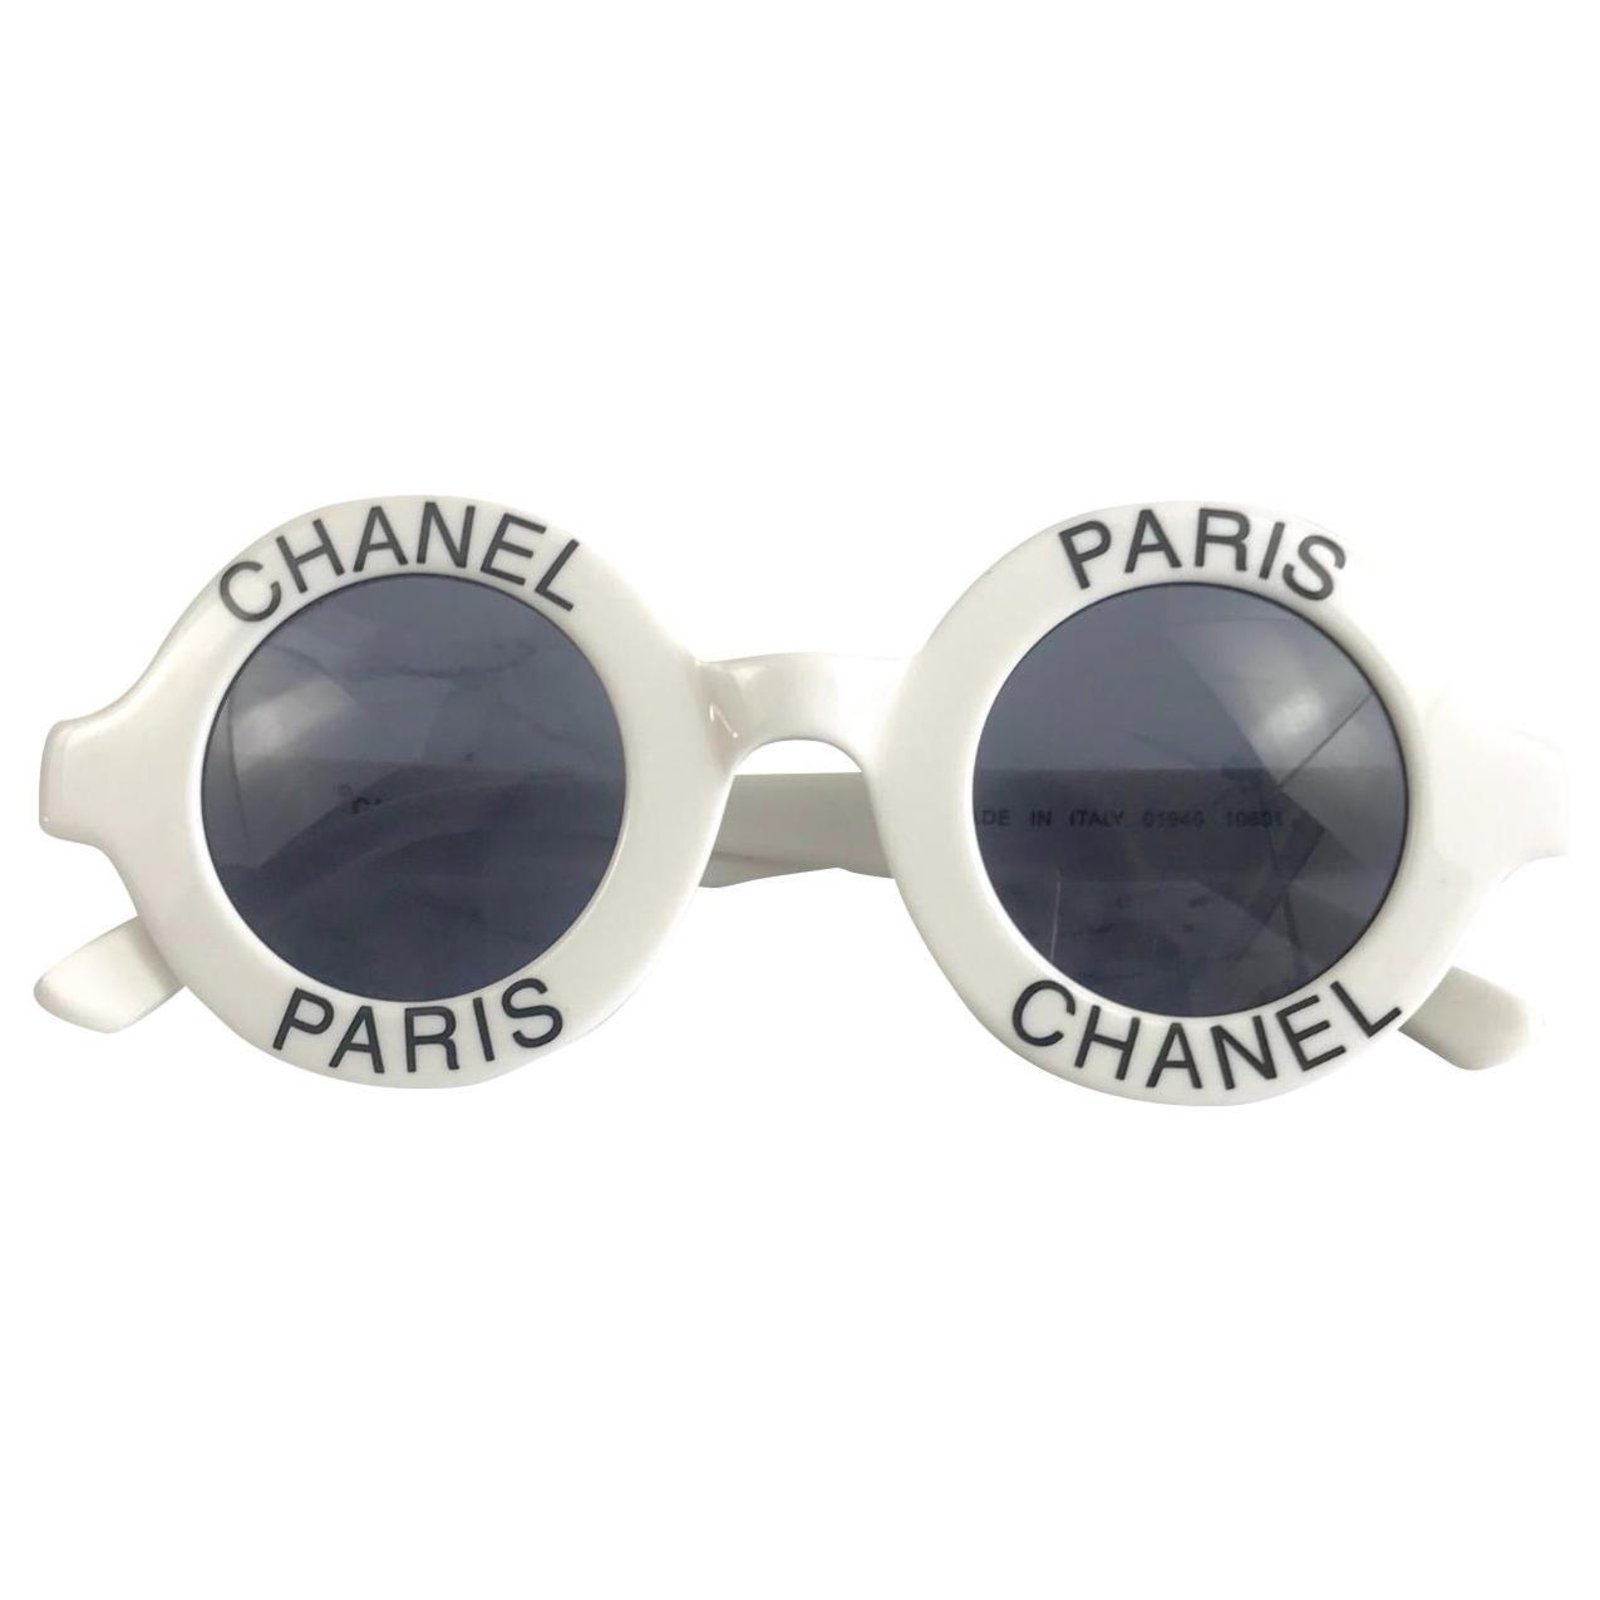 Chanel Vintage 1993 Iconic Chanel Paris White Sunglasses  Vintage chanel  White sunglasses Chanel glasses